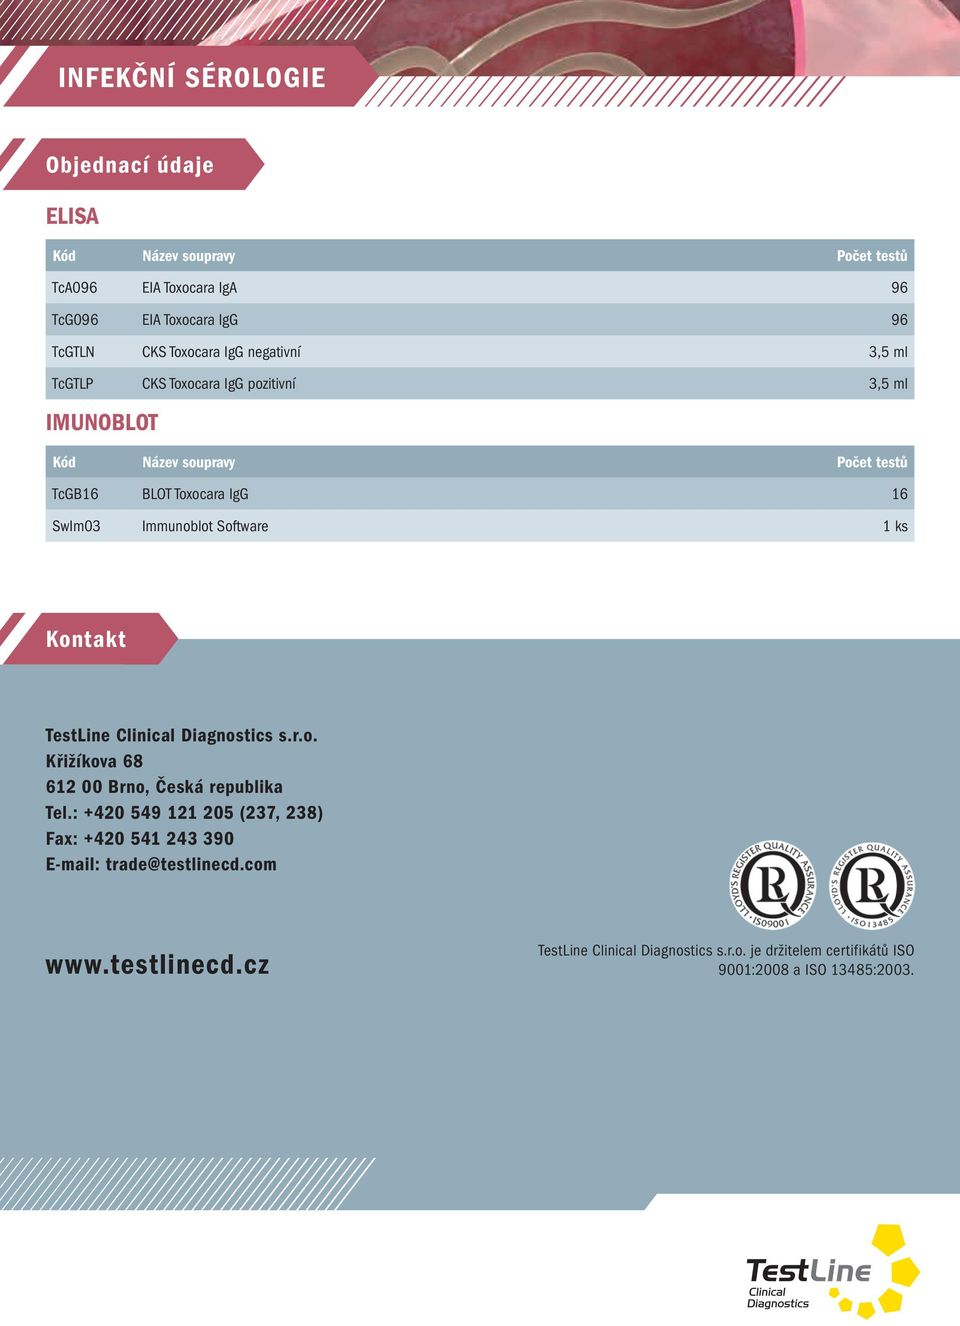 Immunoblot Software 1 ks Kontakt TestLine Clinical Diagnostics s.r.o. Křižíkova 68 612 00 Brno, Česká republika Tel.